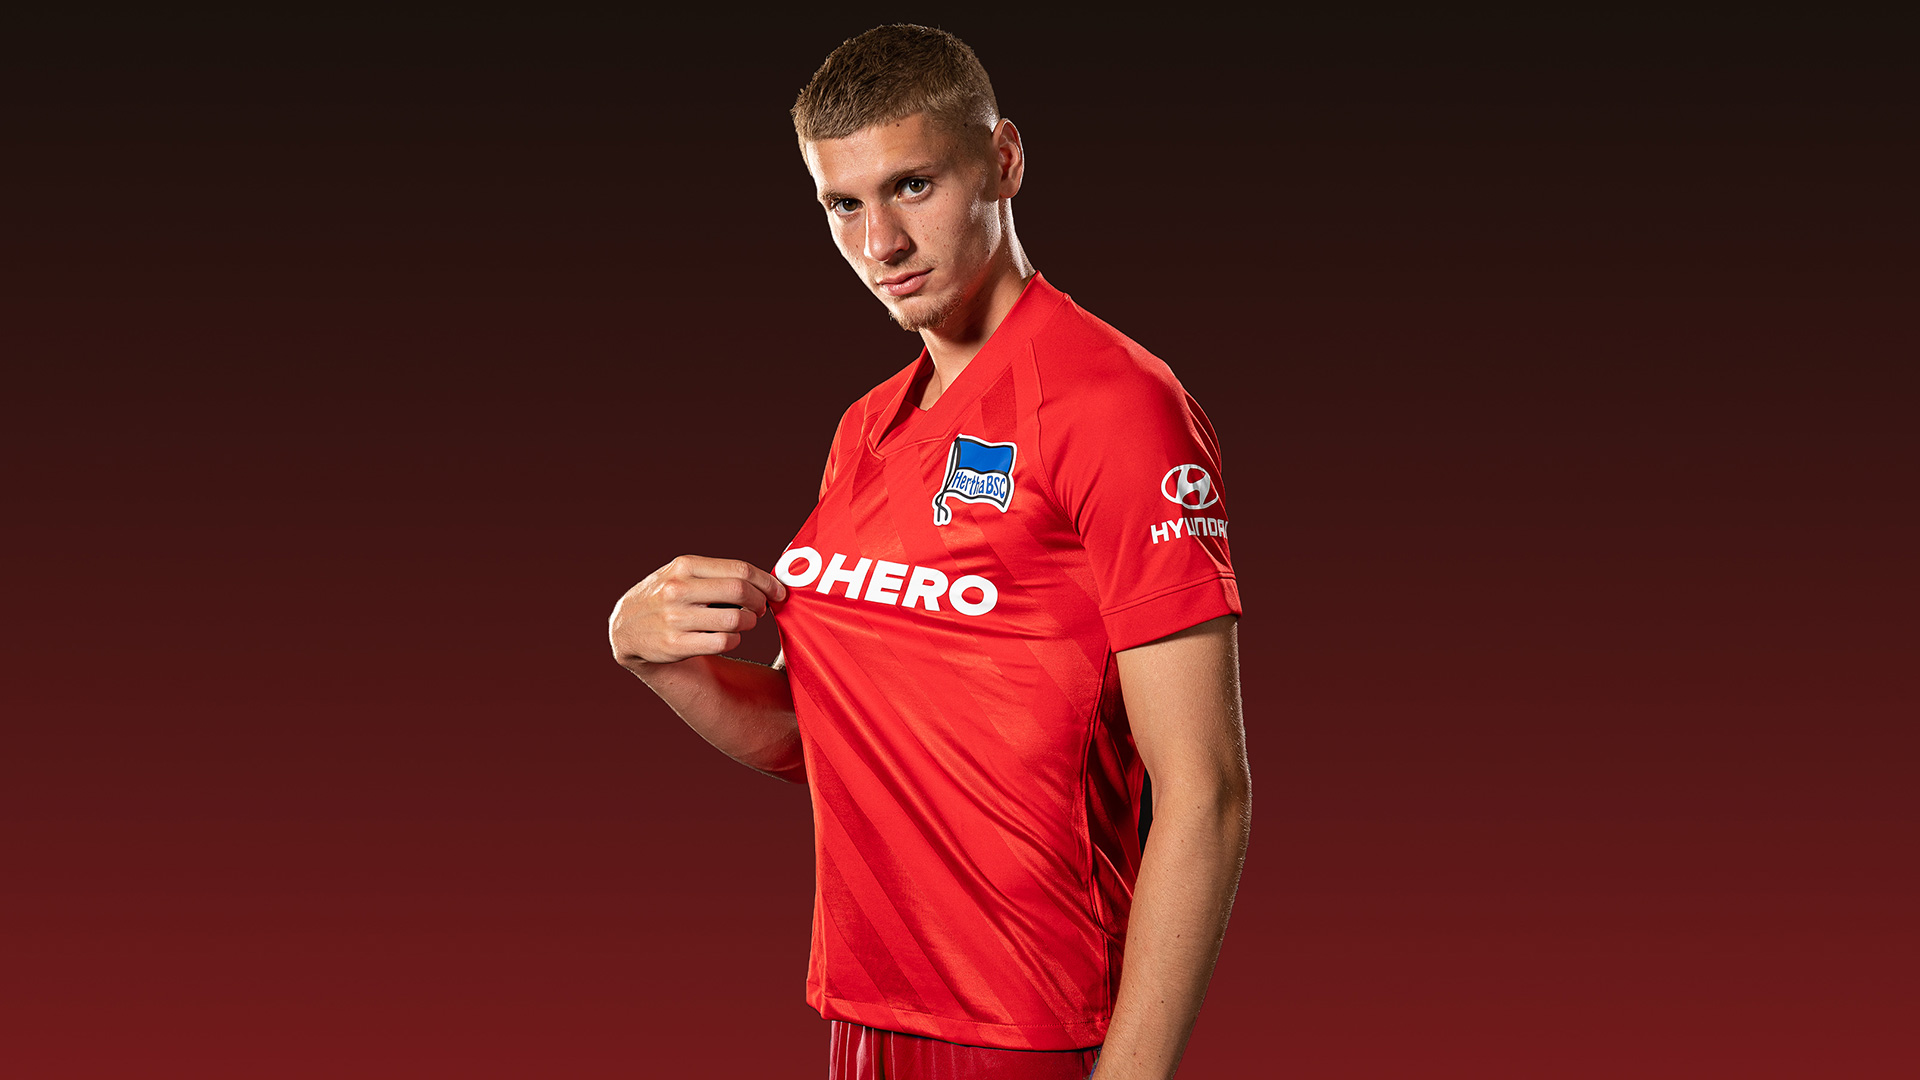 Márton Dárdai wearing our 2021/22 third shirt.